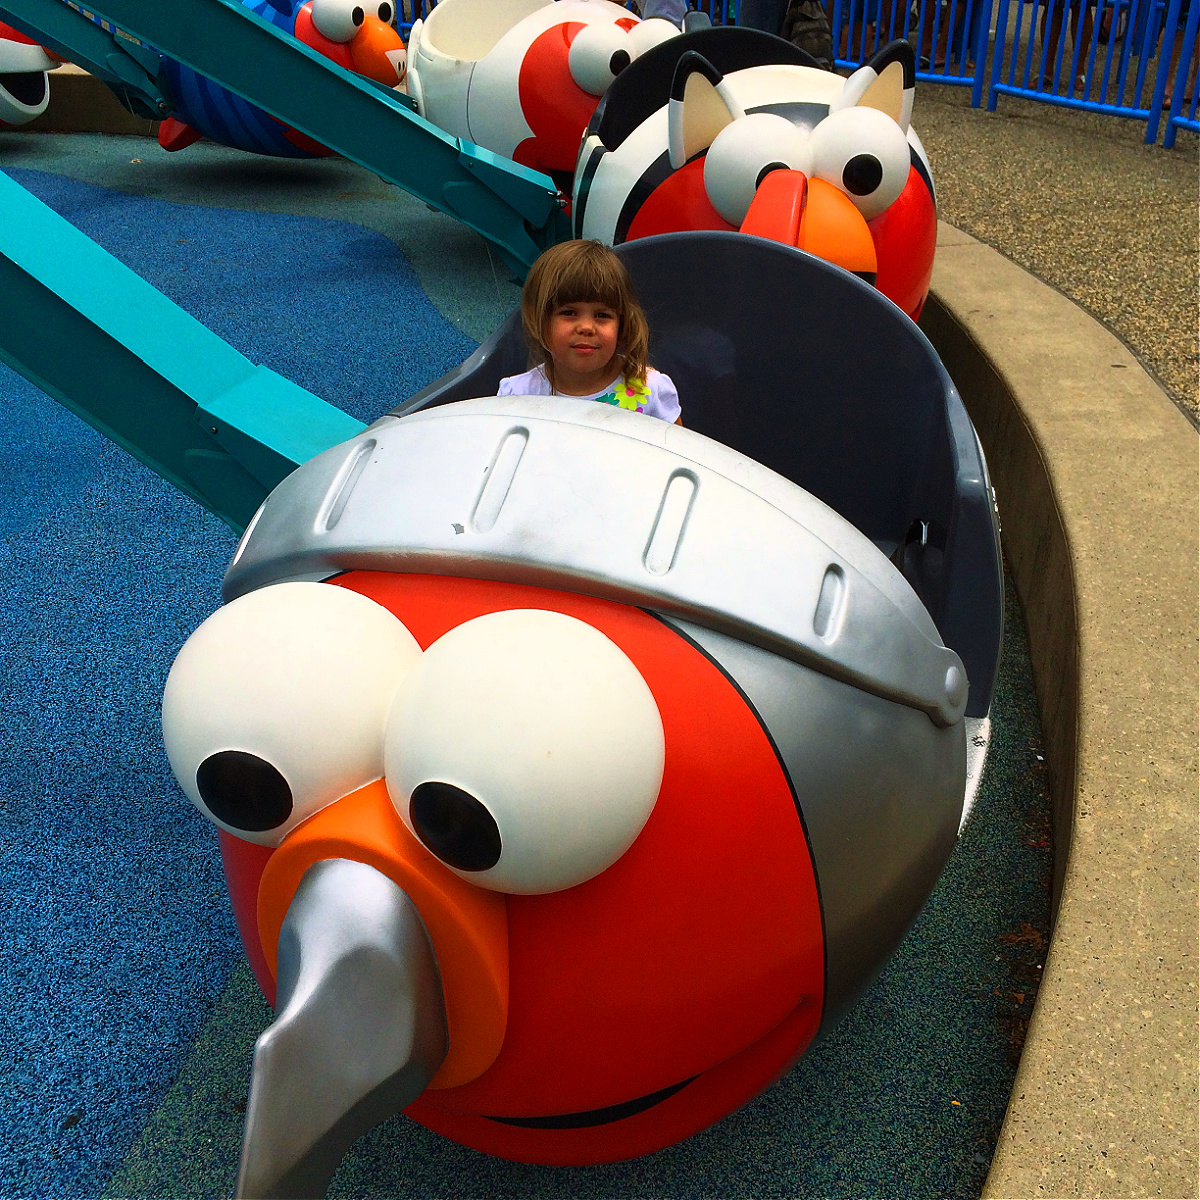 Best Amusement Parks for families near DC - Skylar Aria's Adventures